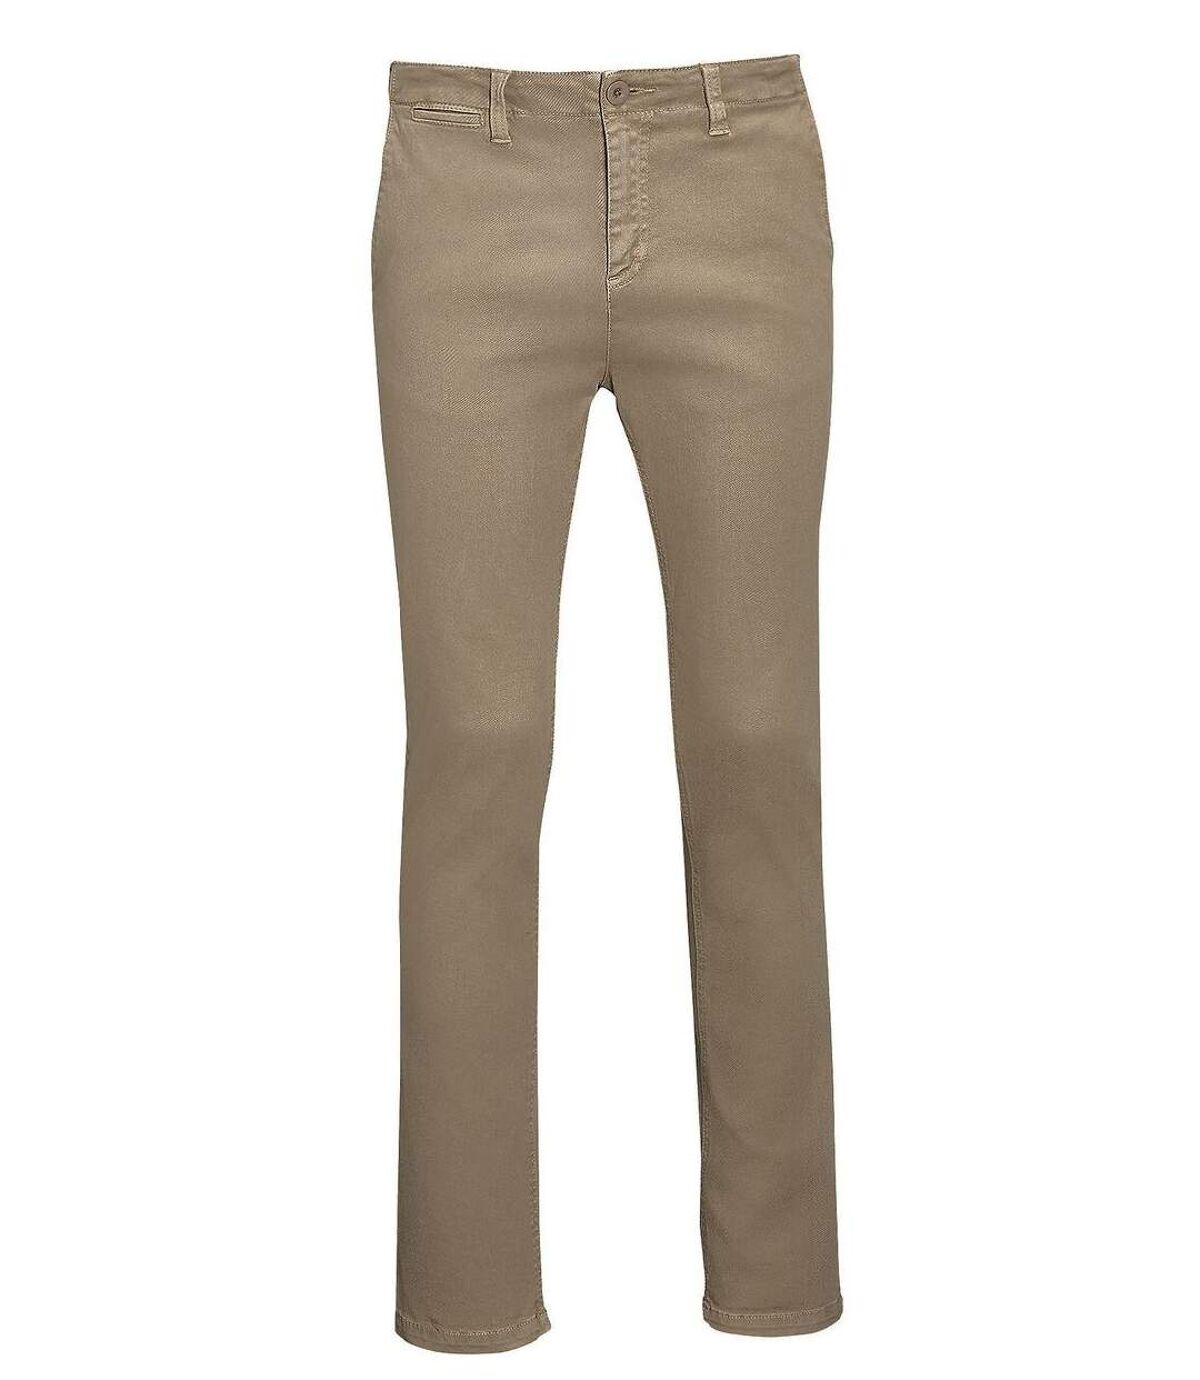 pantalon toile chino stretch homme - 02120 L35 - beige chataigne